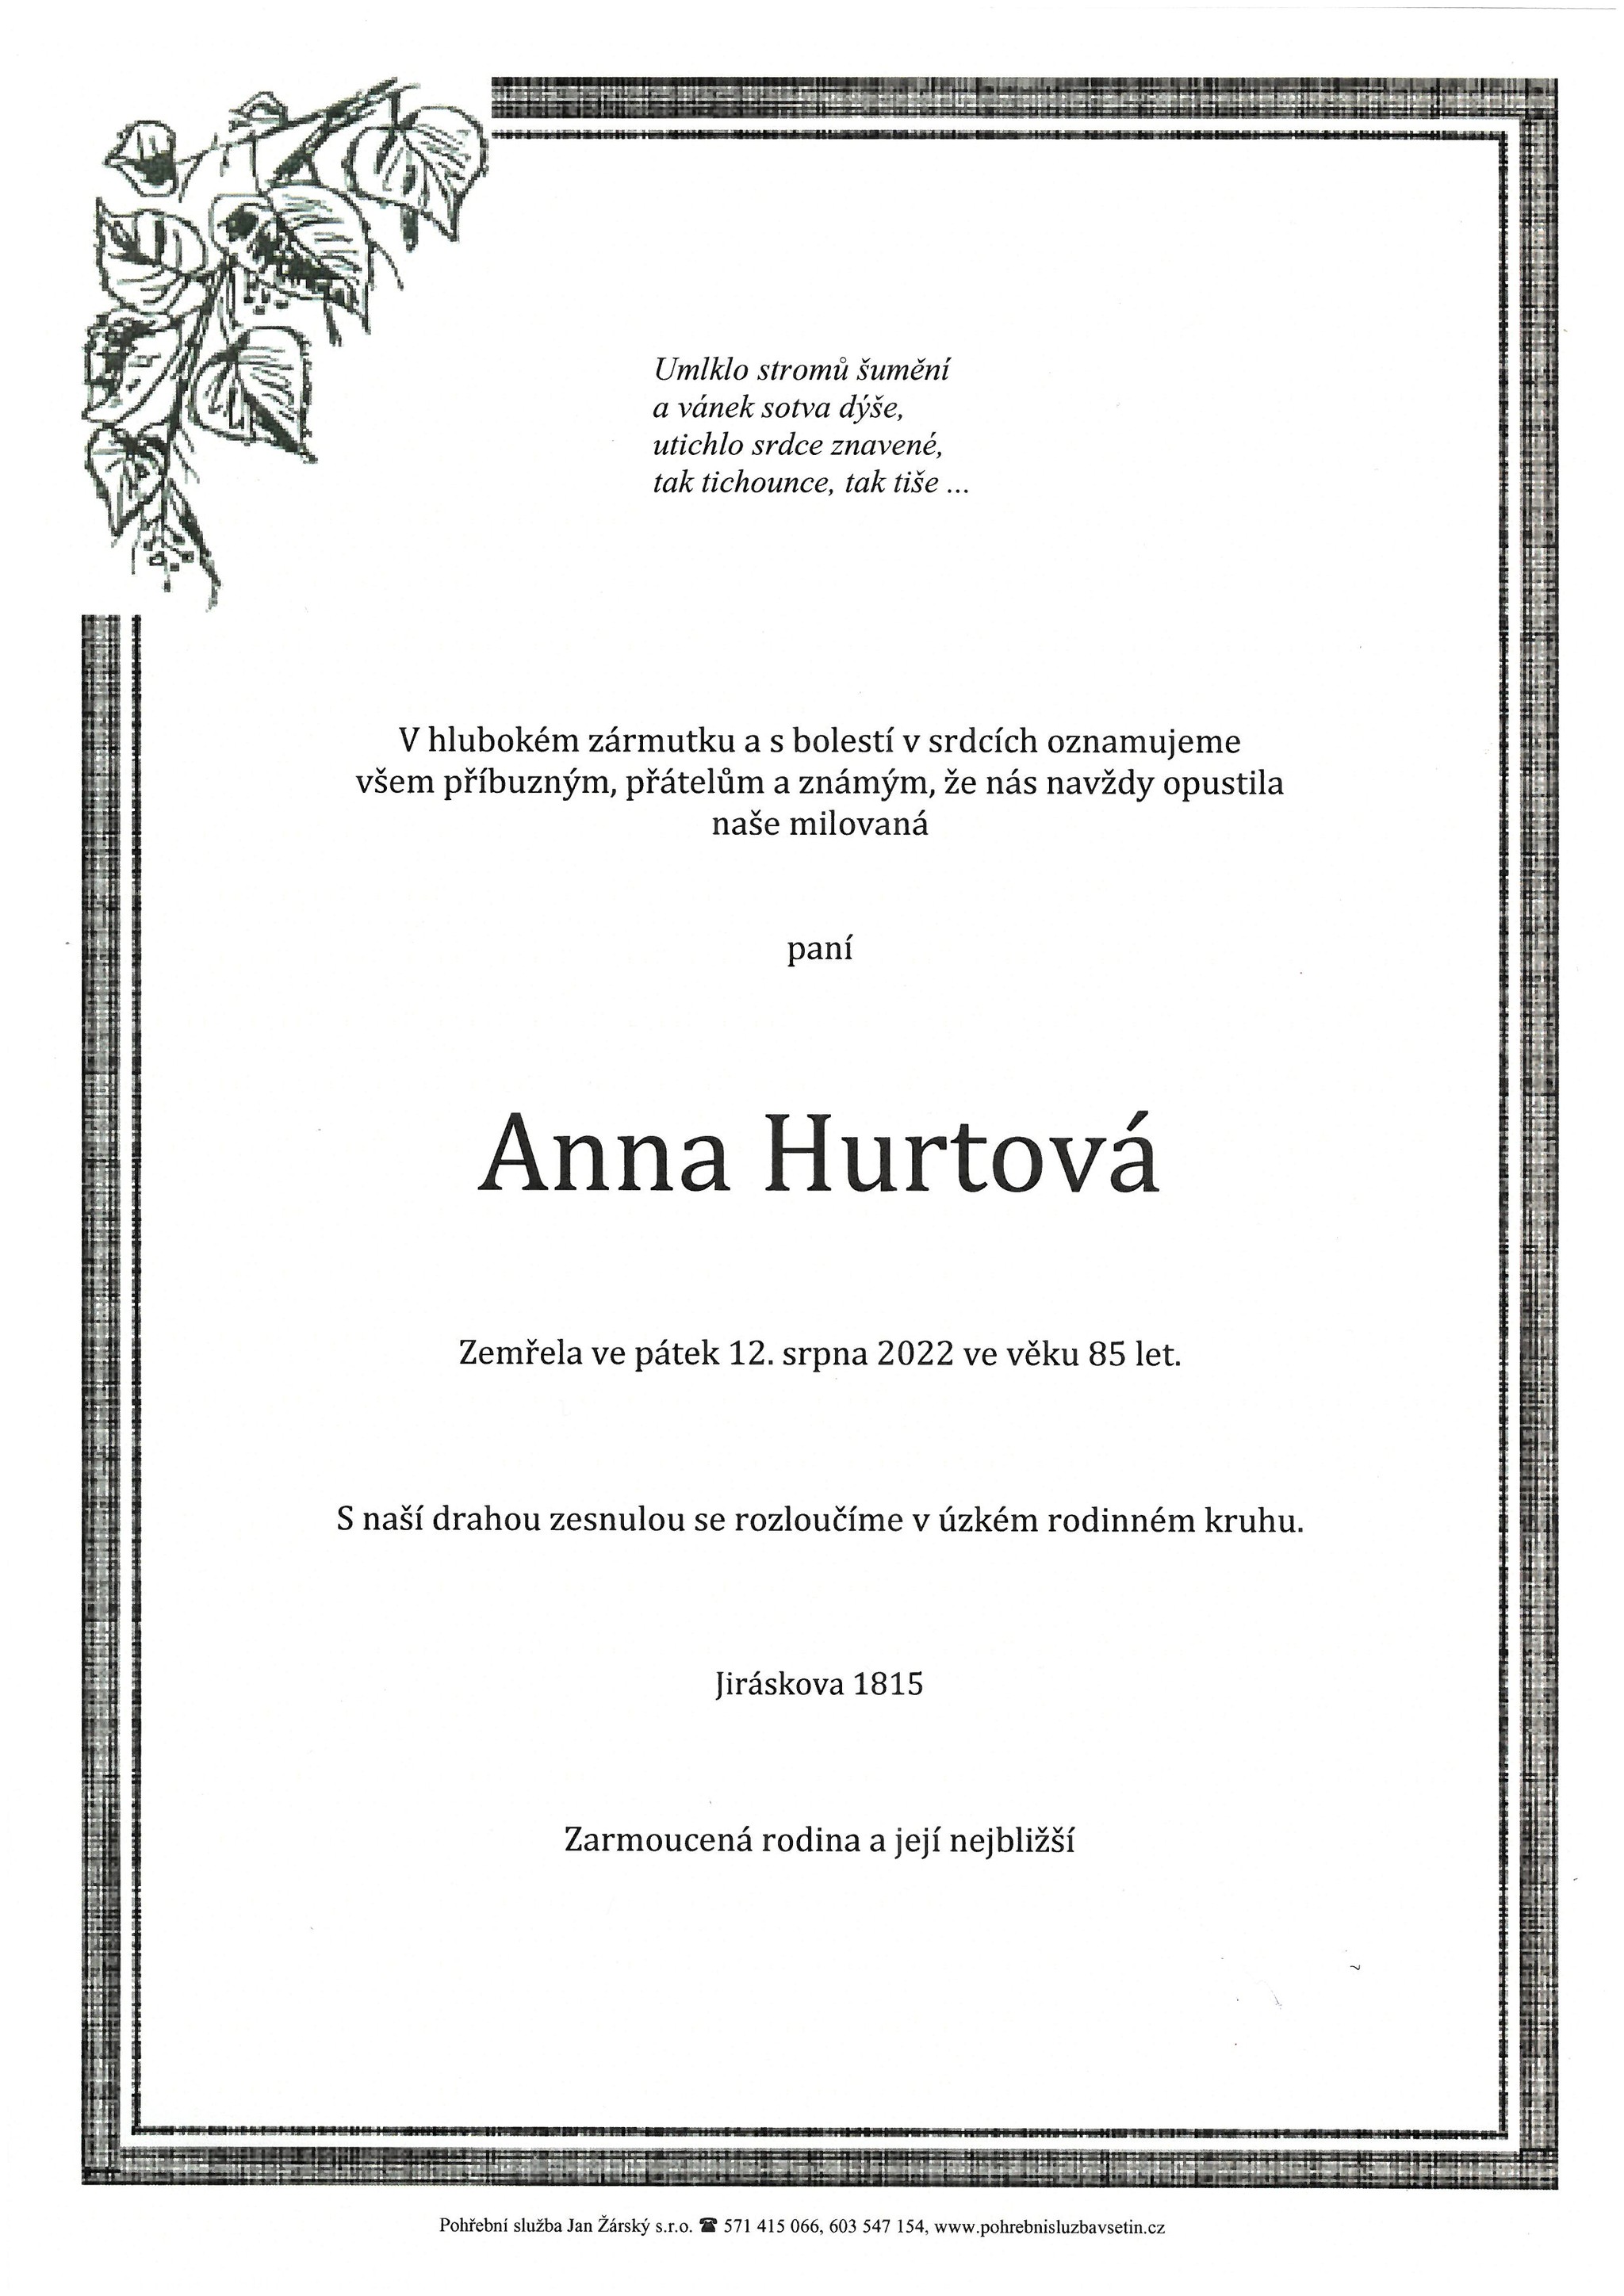 Anna Hurtová